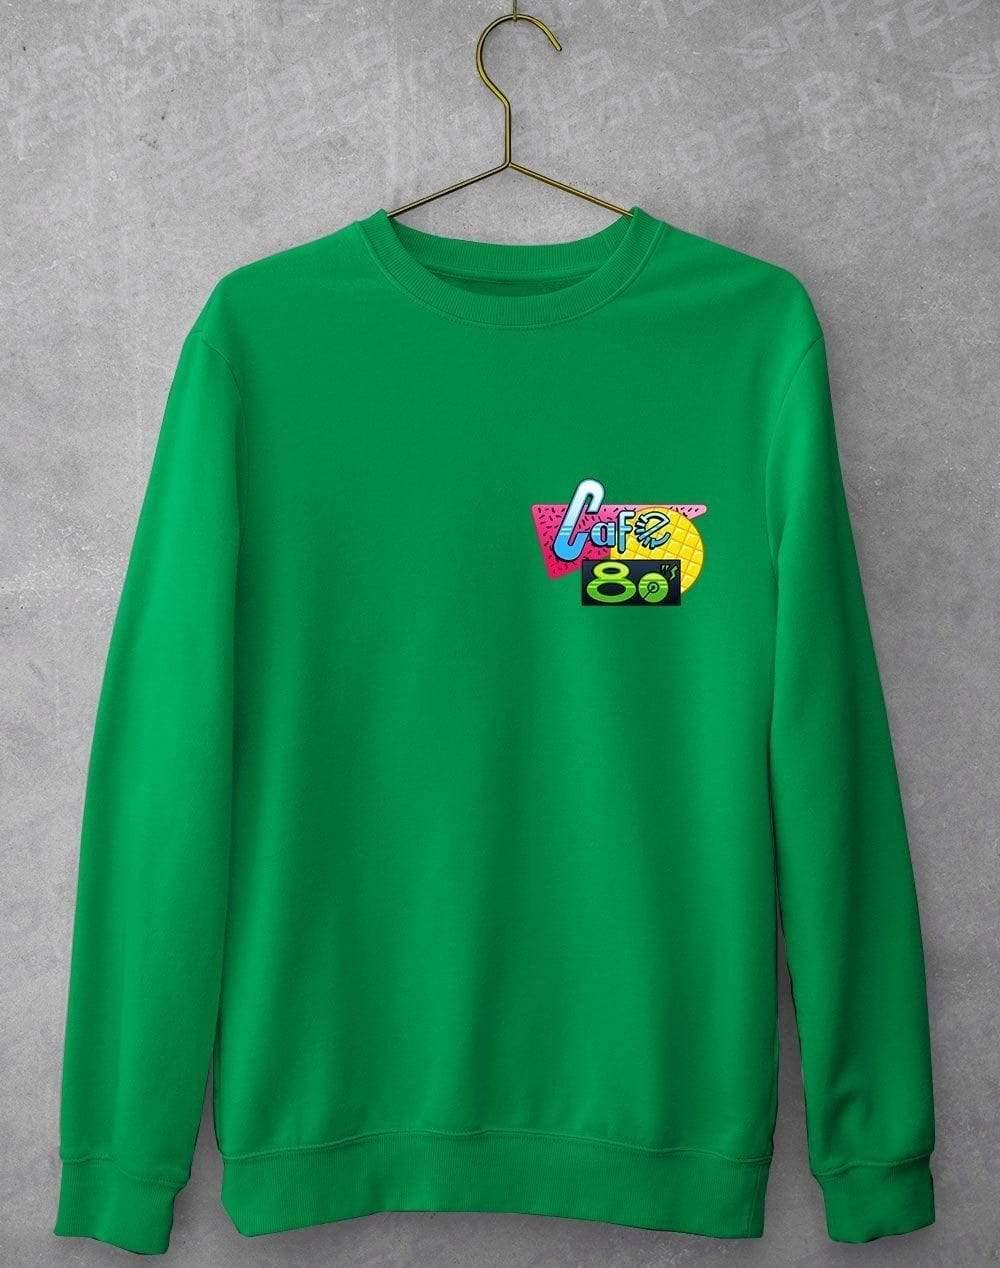 Cafe 80s Pocket Print Sweatshirt S / Kelly Green  - Off World Tees